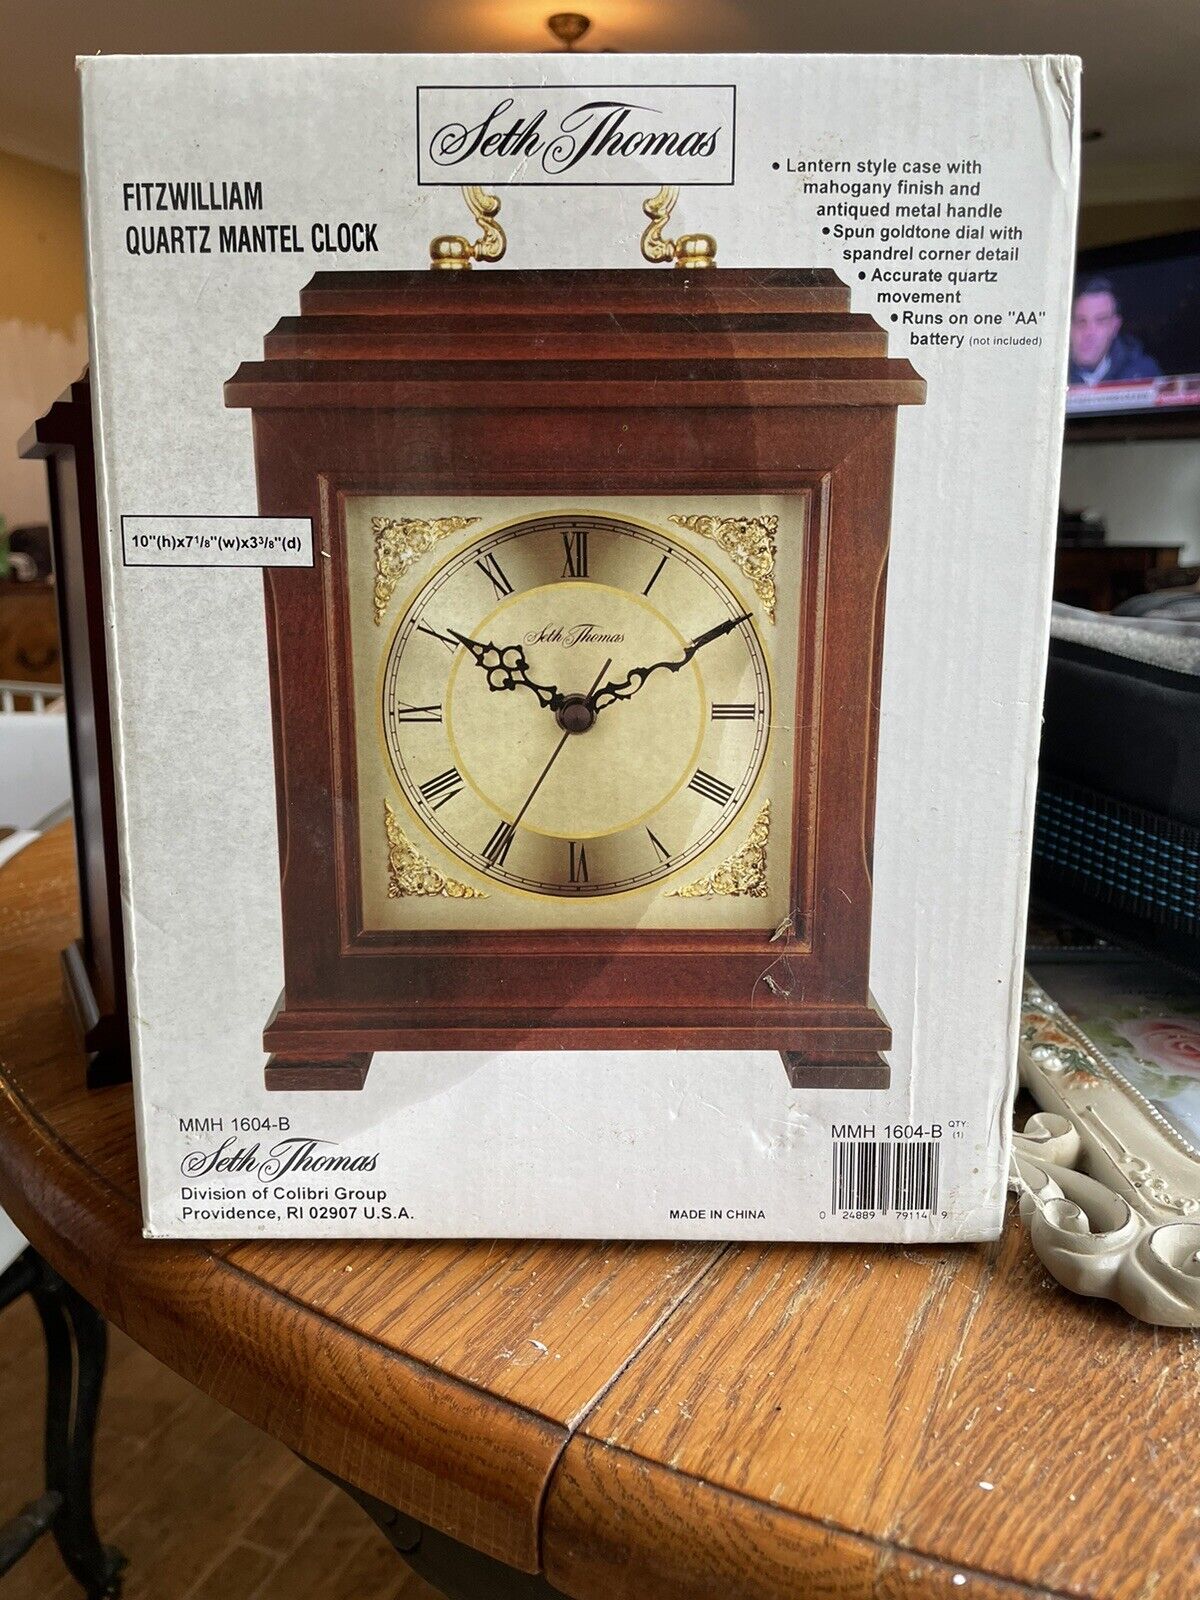 Seth Thomas Fitzwilliam Quartz Mantel Clock Lantern Style Case MMH 1604-B NOS